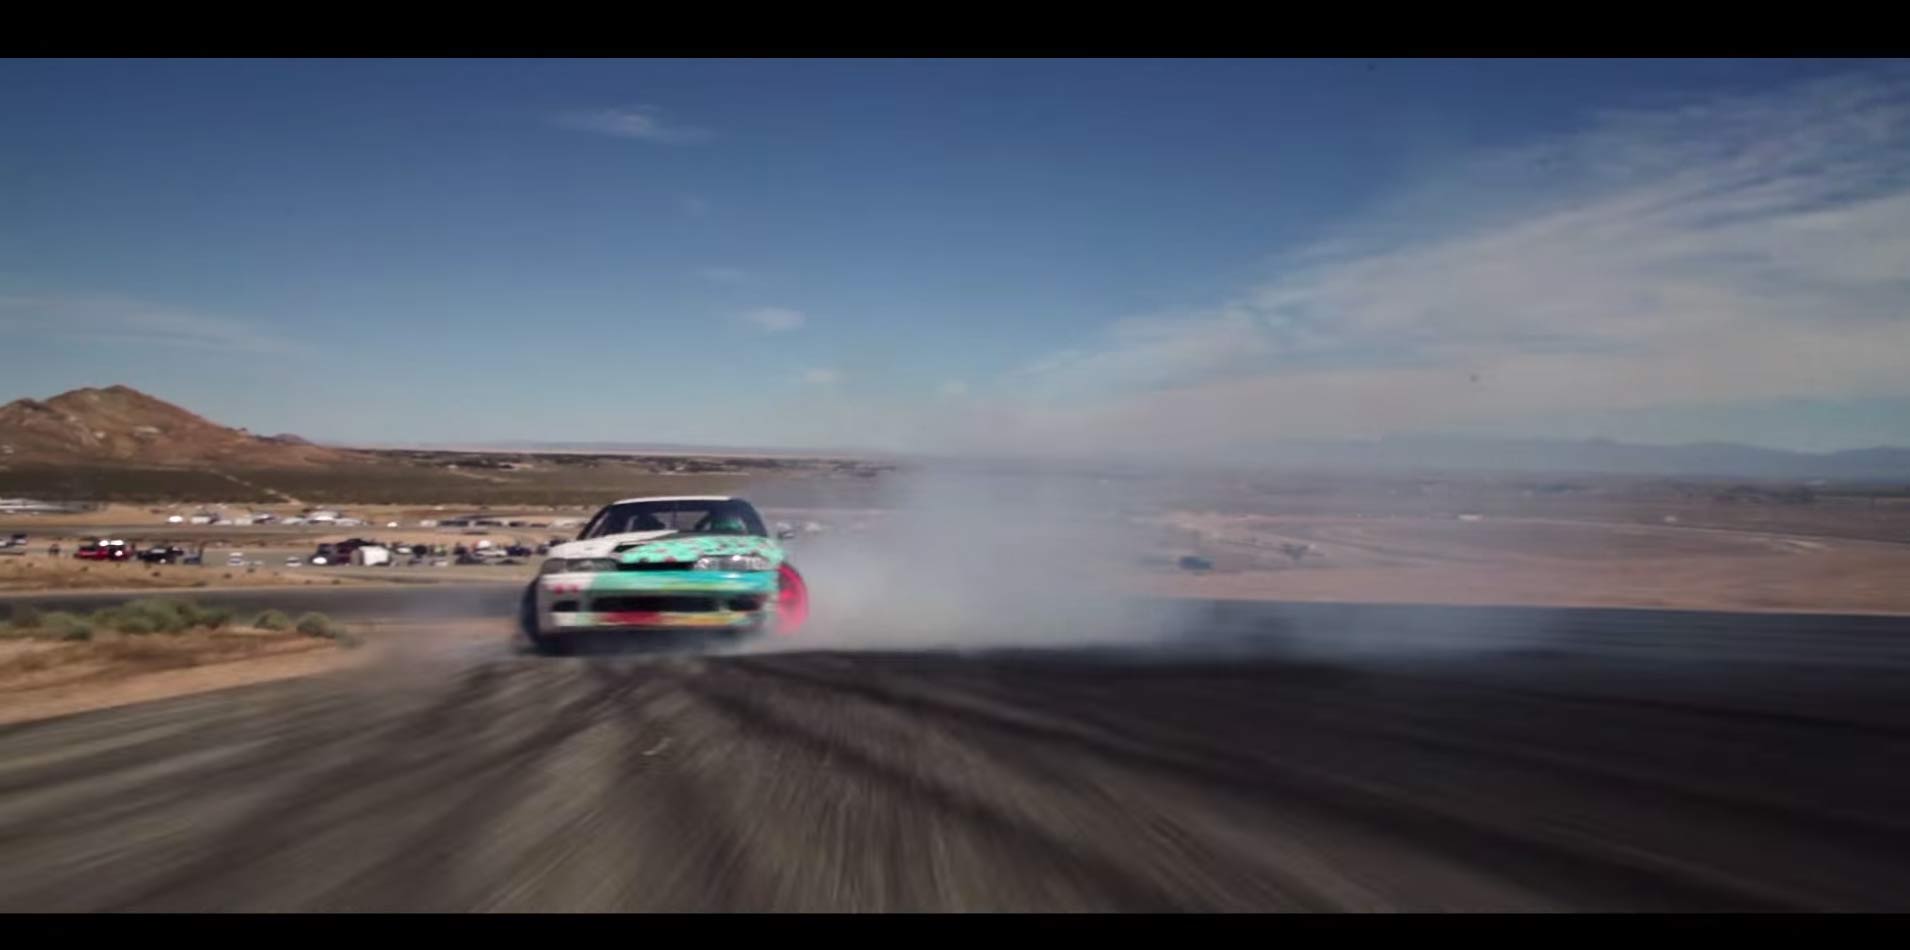 Drift video : drift 360 stepeni &#8211; jer je zabavno (video), Life.ba